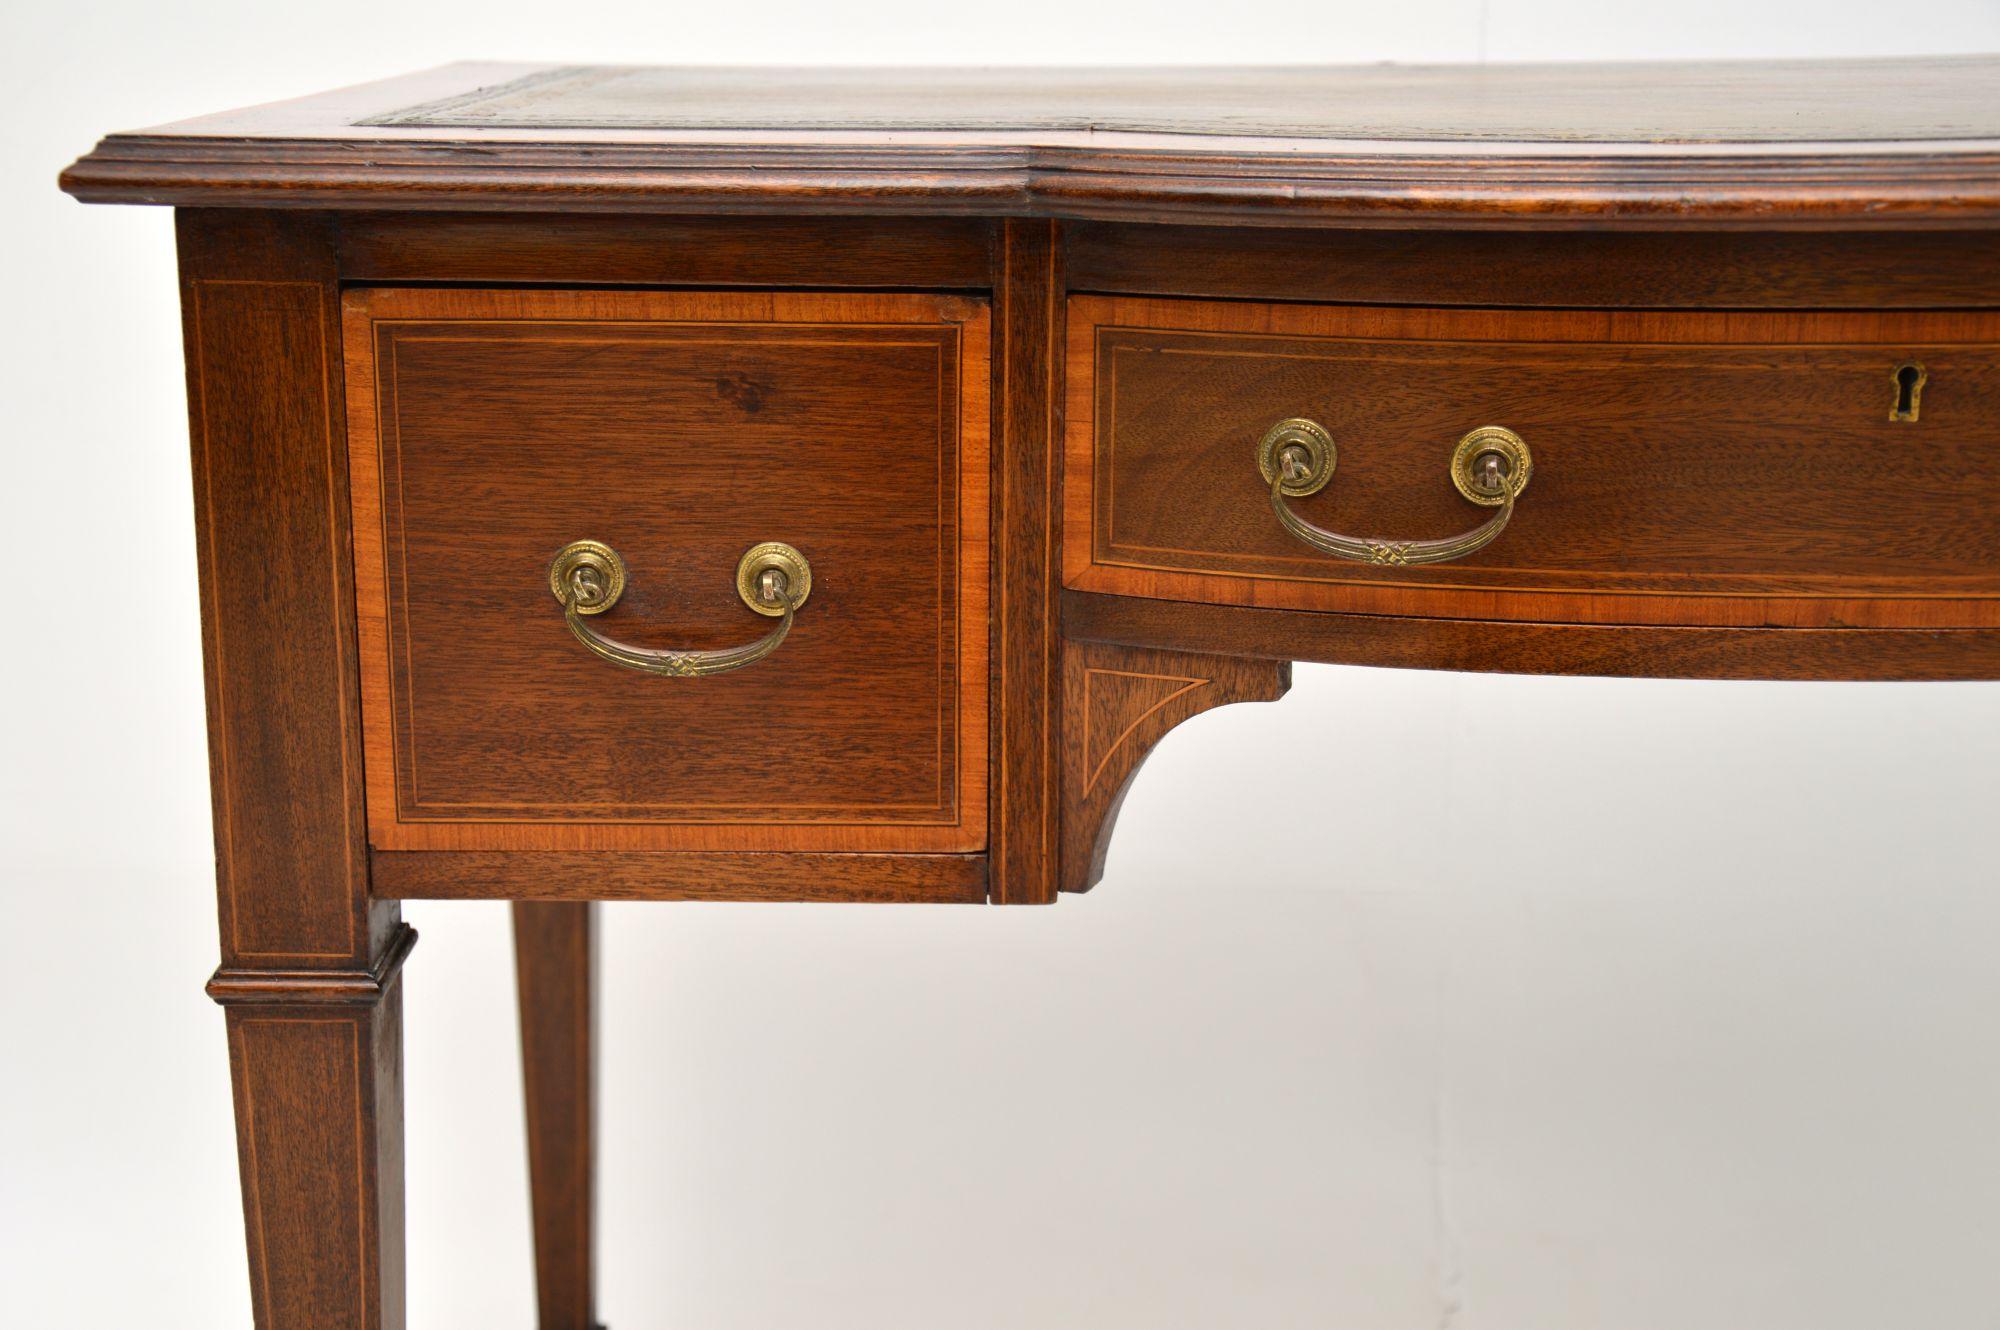 Late 19th Century Antique Edwardian Inlaid Mahogany Desk / Writing Table